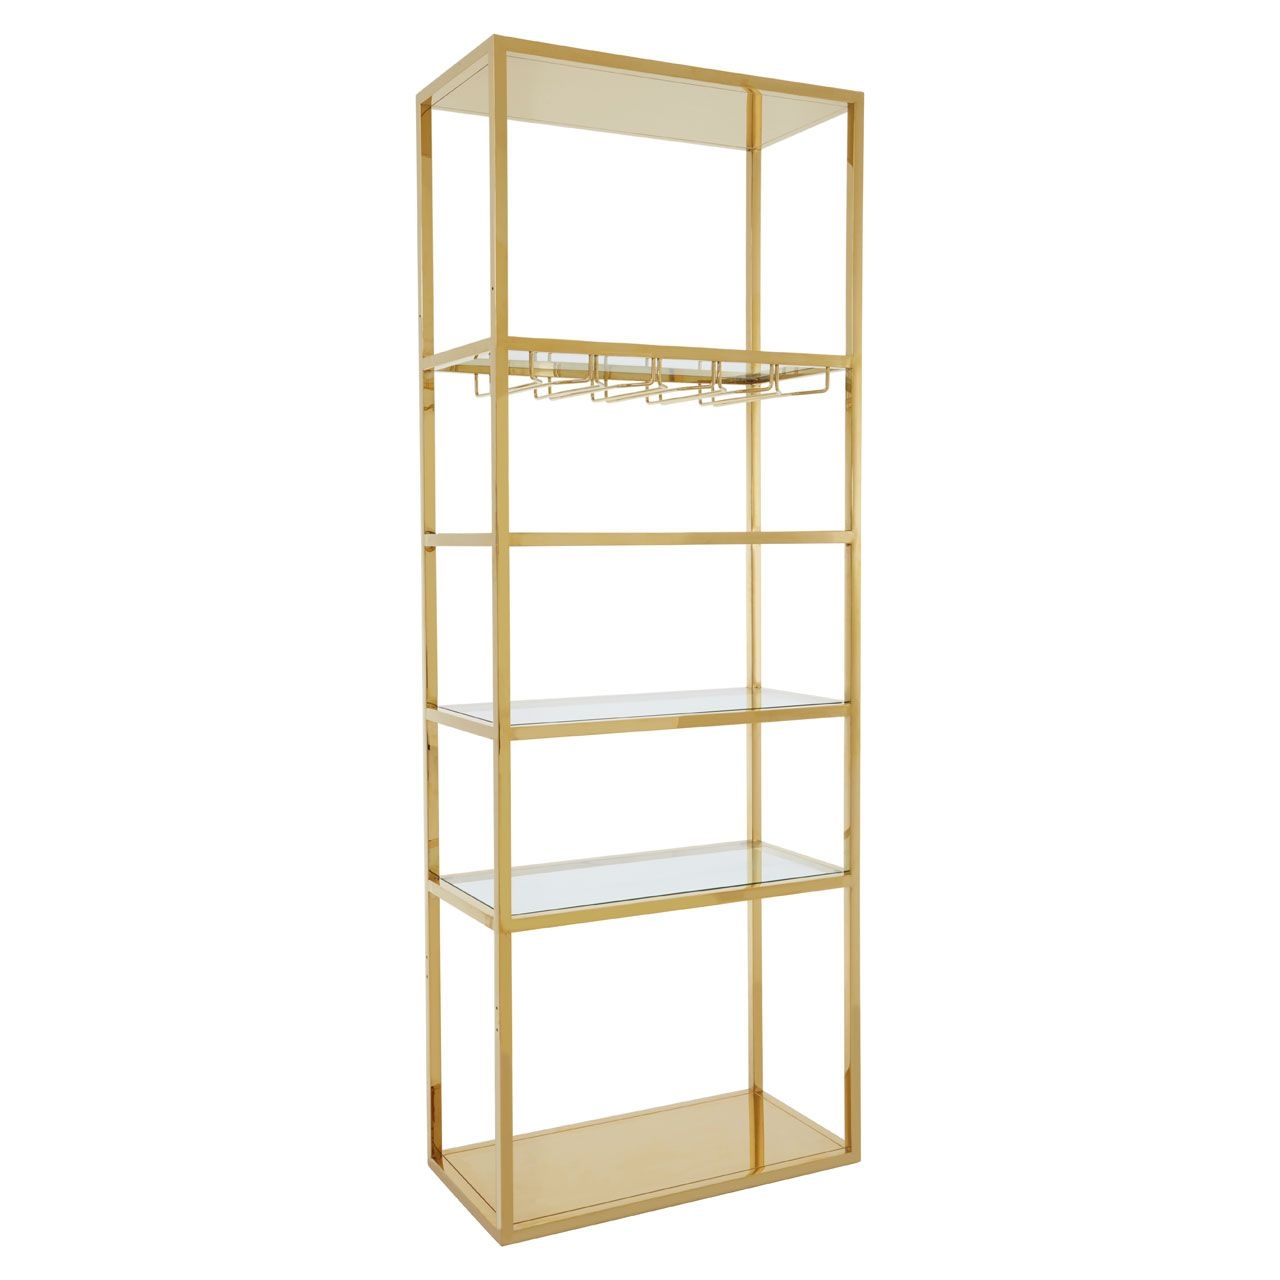 Piermount Glass Shelves Bar Shelving Unit In Gold